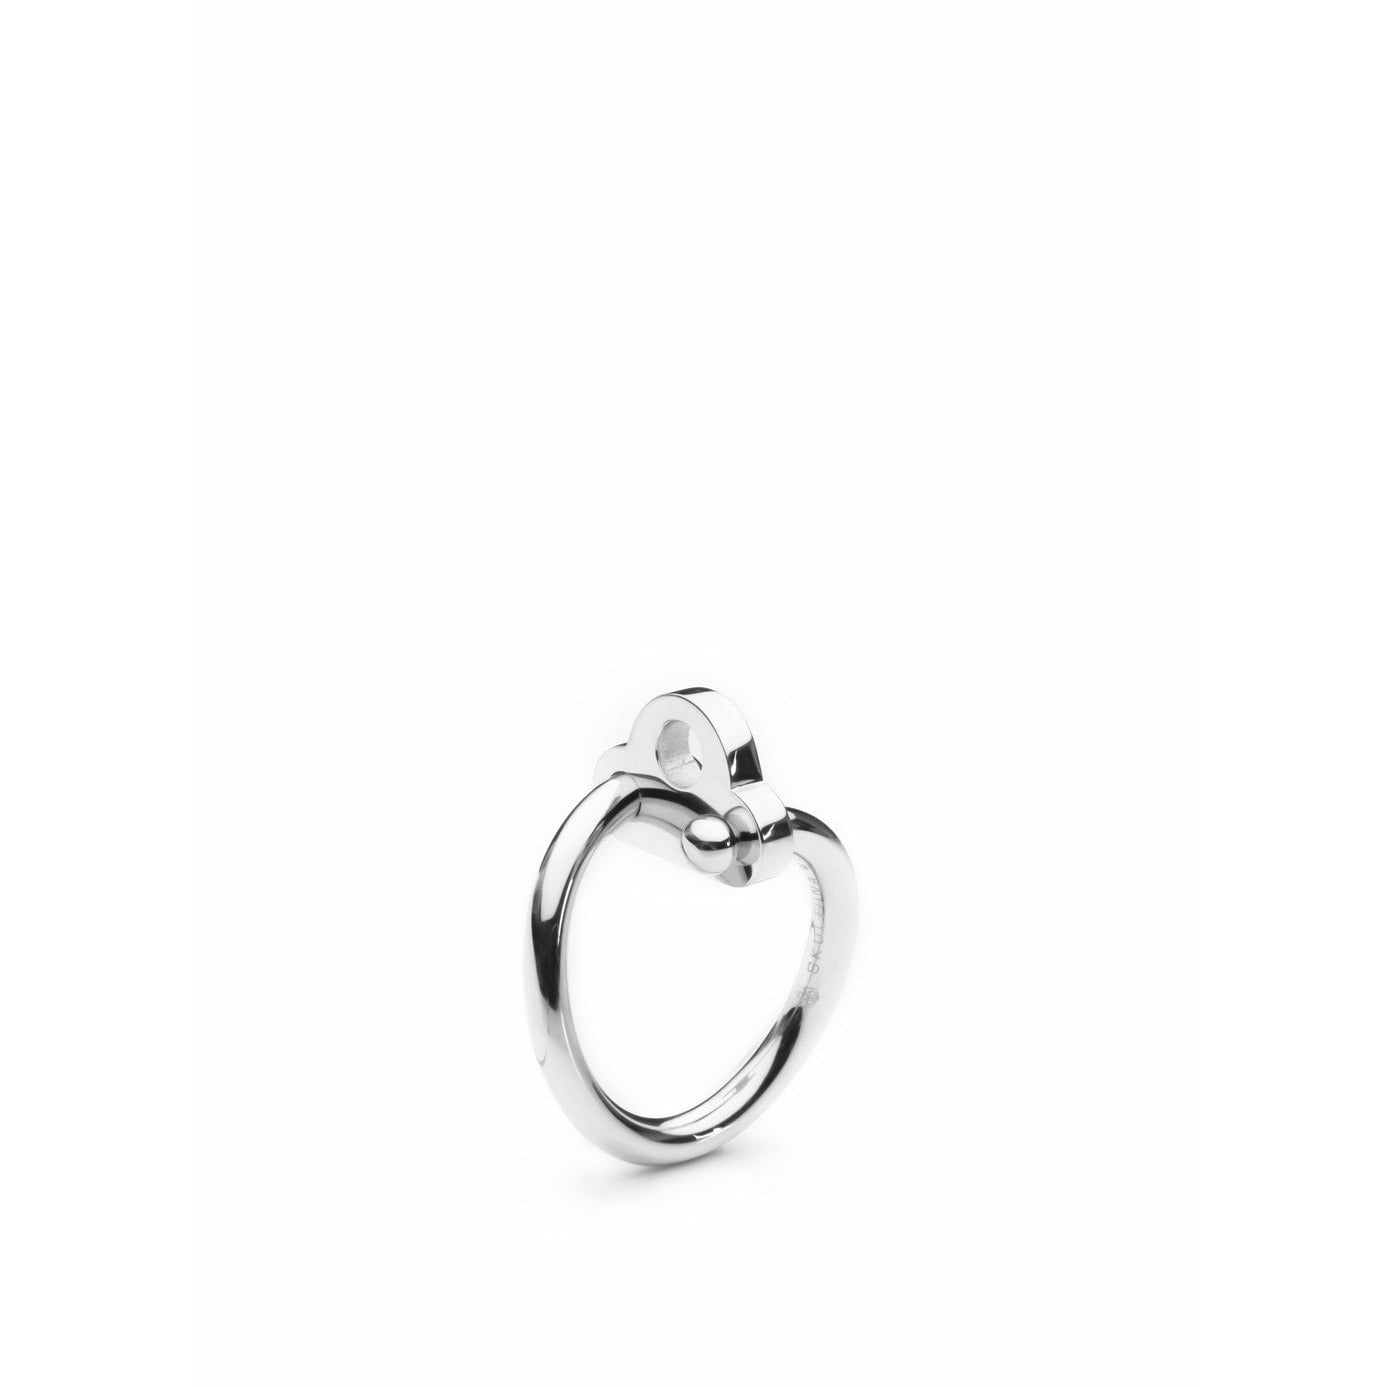 Skultuna Key Ring Acero pulido pequeño, Ø1,6 cm